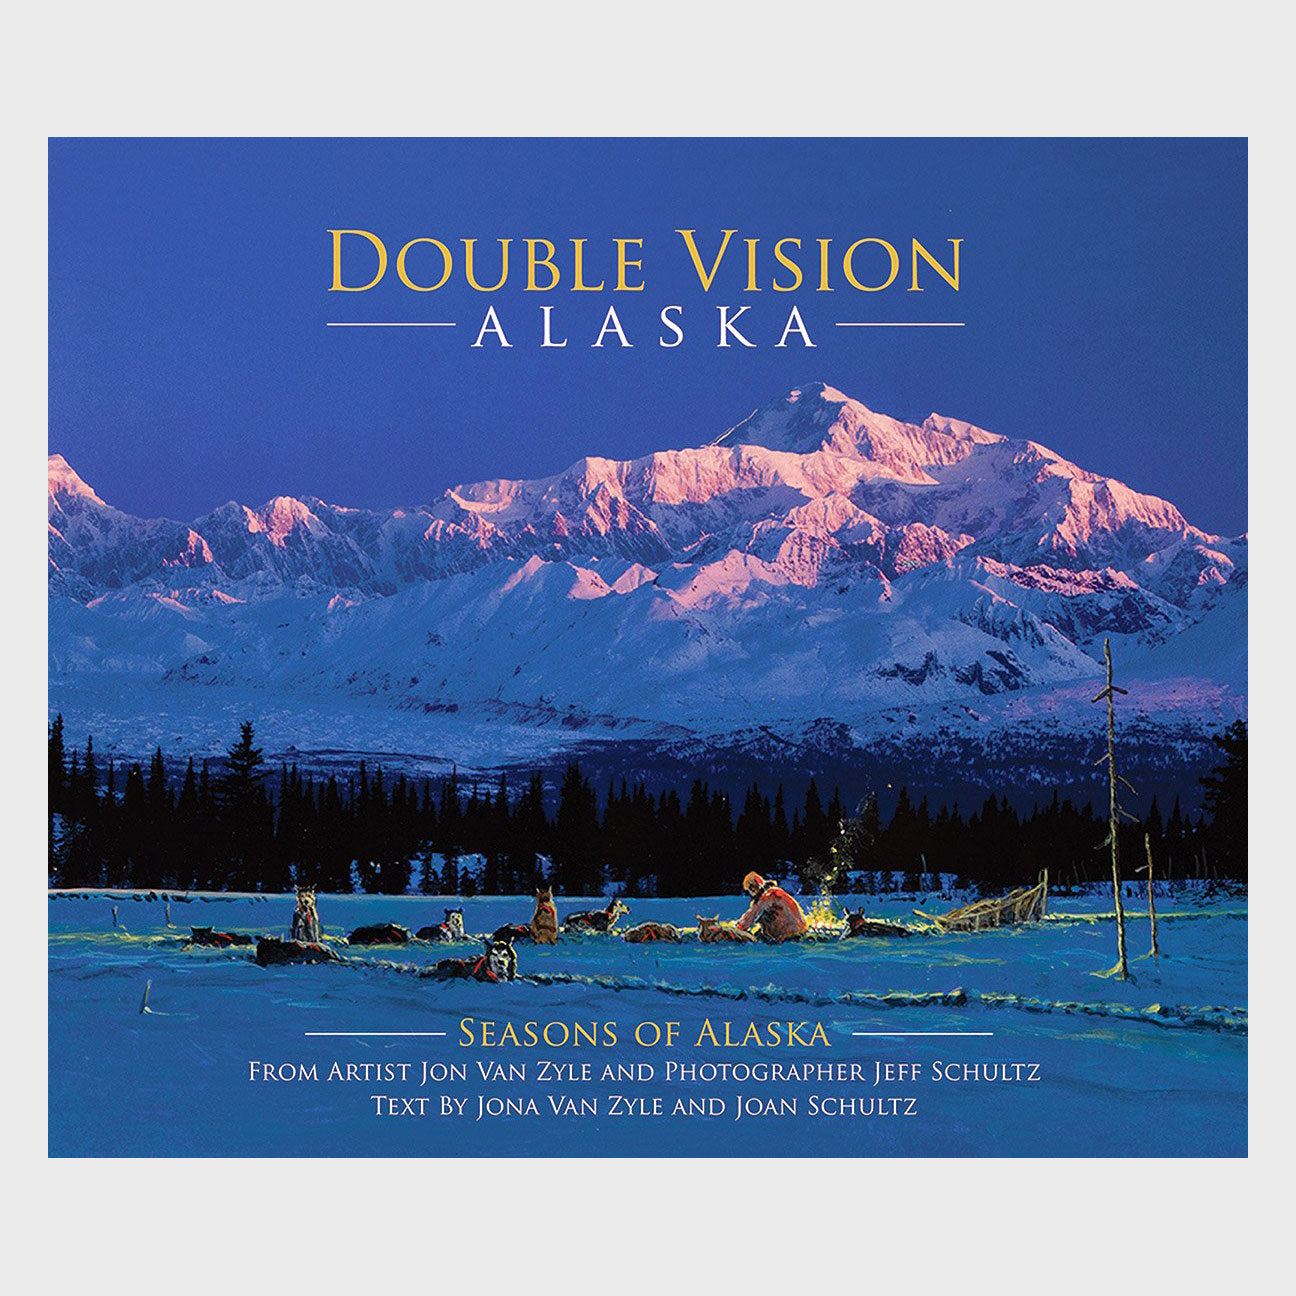 Double Vision Alaska by Joan Schultz and Jona Van Zyle